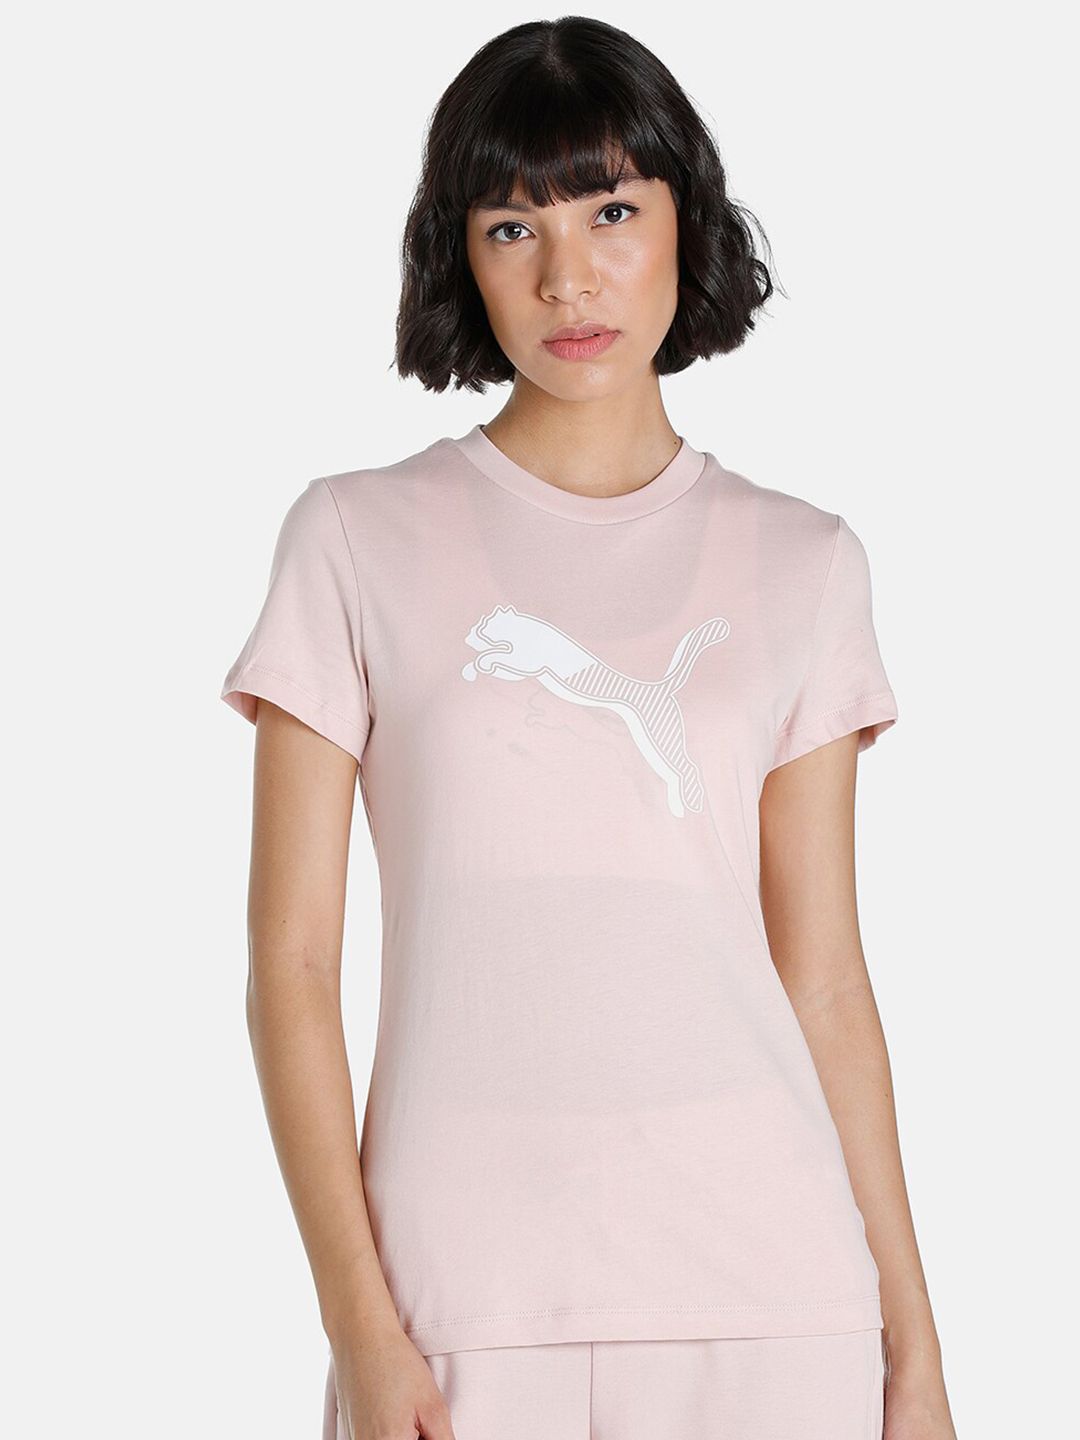 Puma Women Pink Graphic Printed Cotton Tshirt Price in India